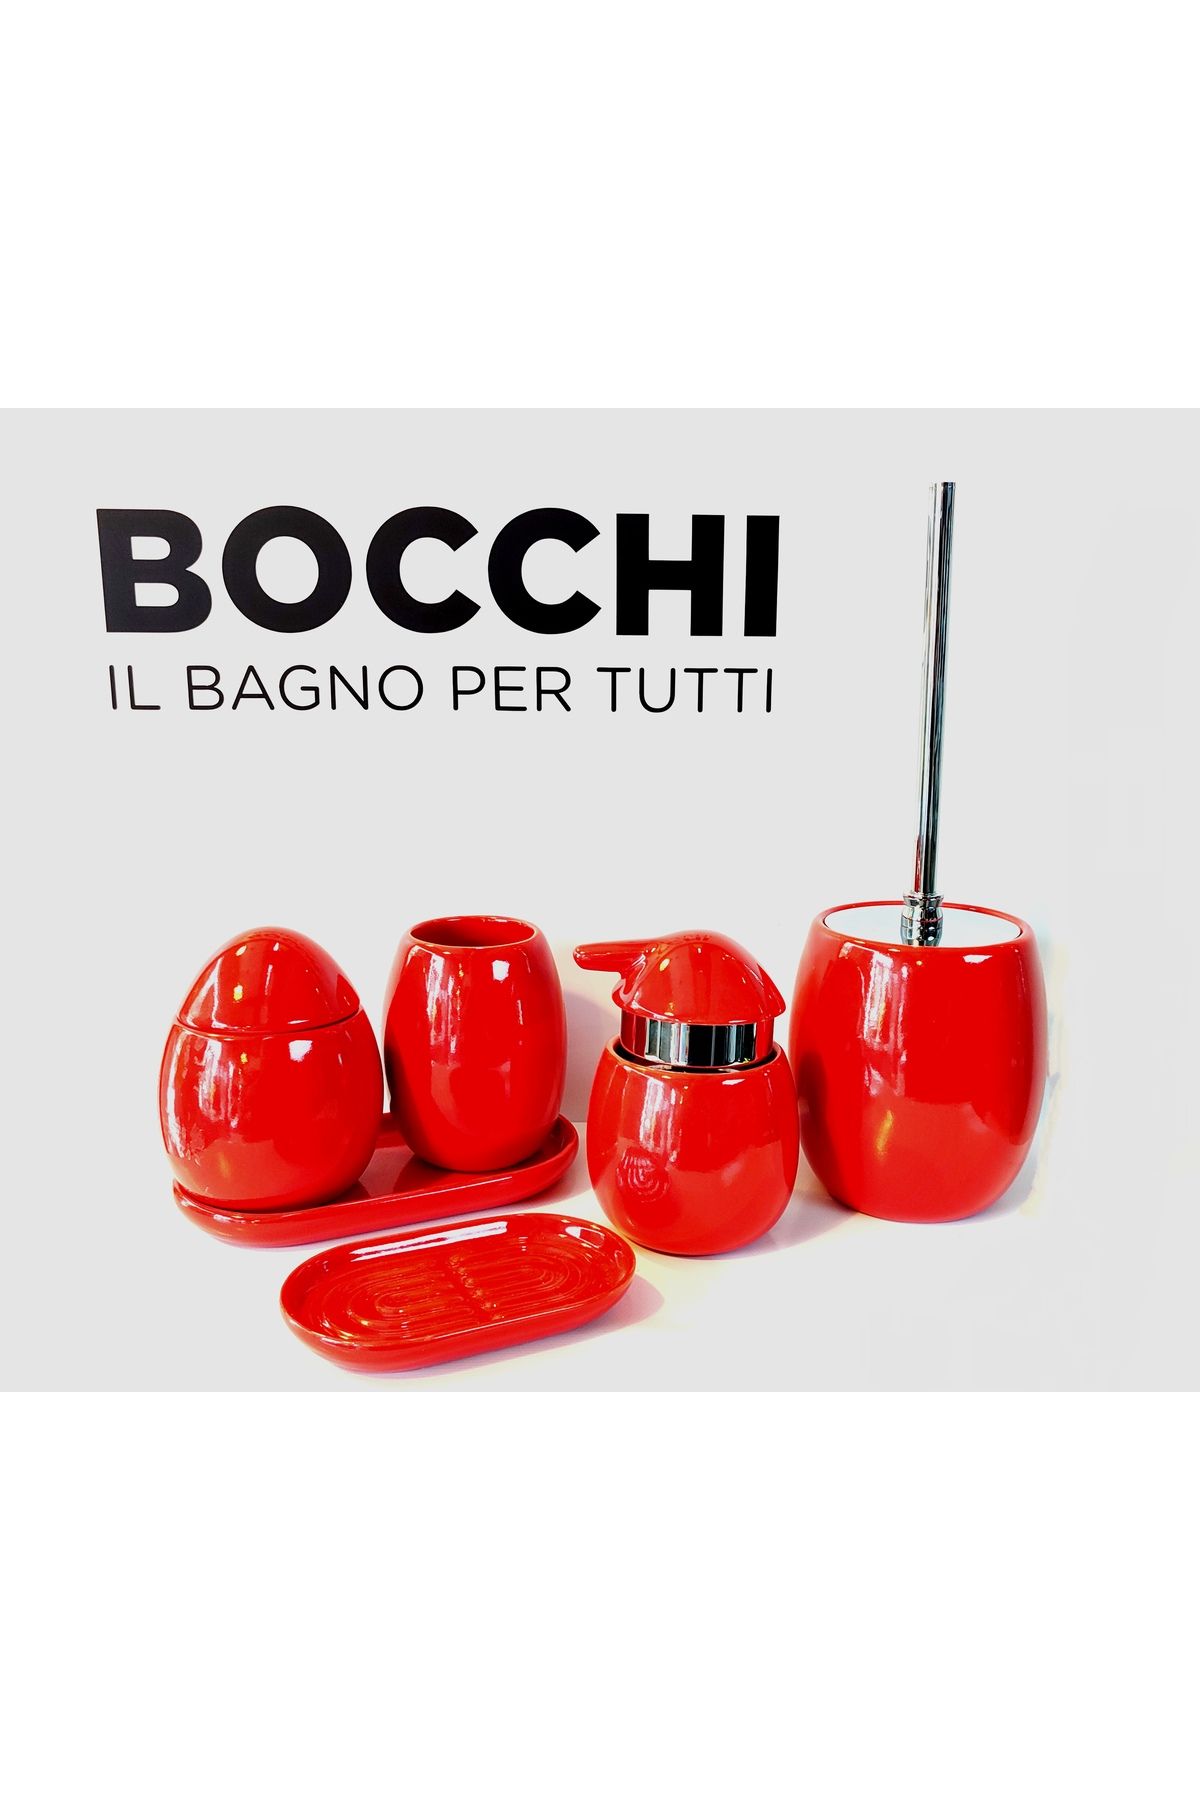 Bocchi UOVO 3023-019 6lı Banyo Seti Parlak Kırmızı